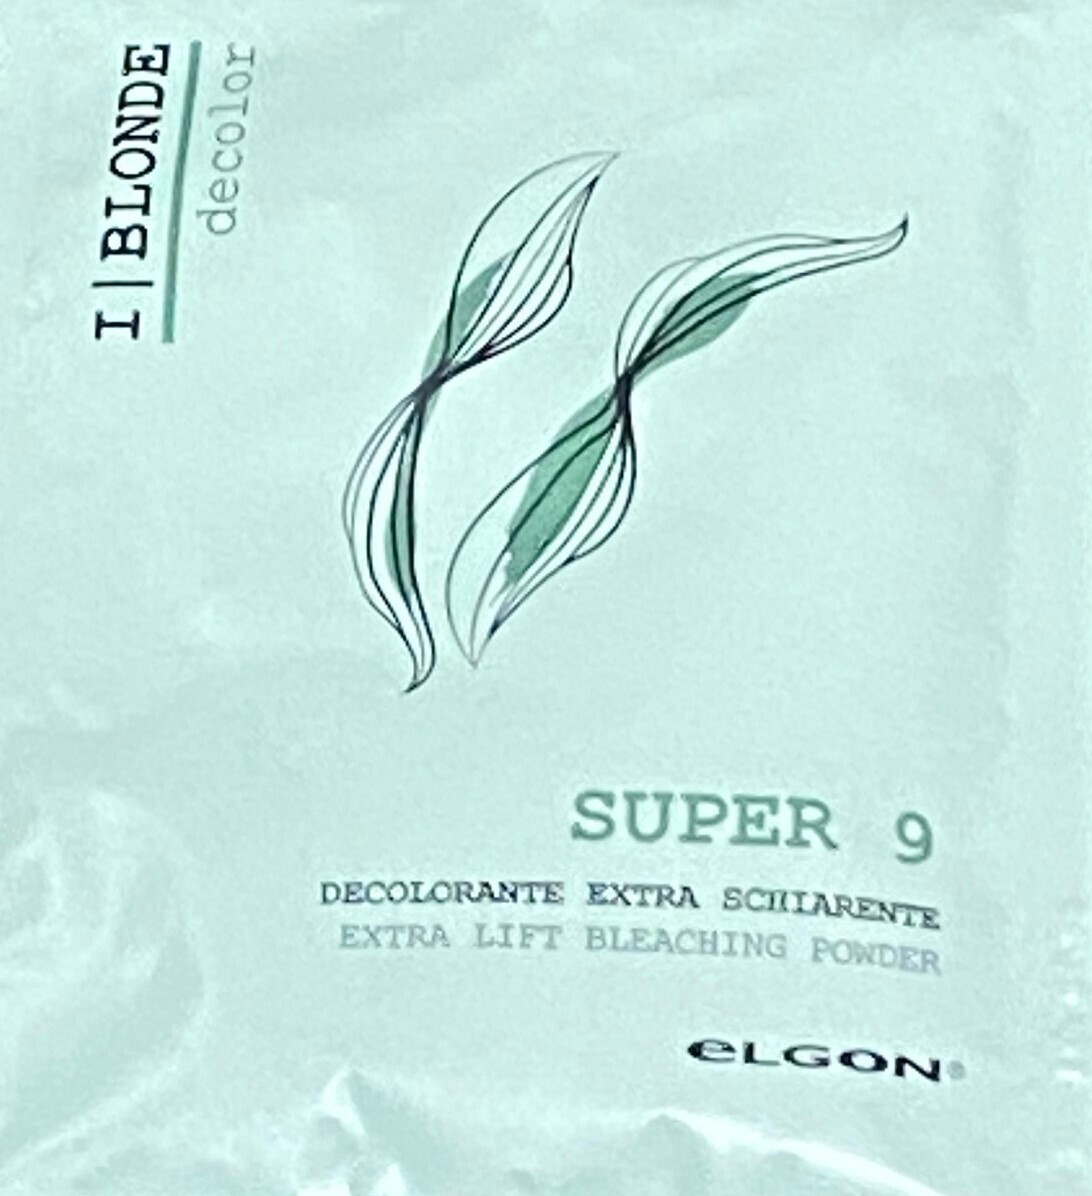 BUSTINA DECOLORANTE SUPER9 ELGON 50 GR